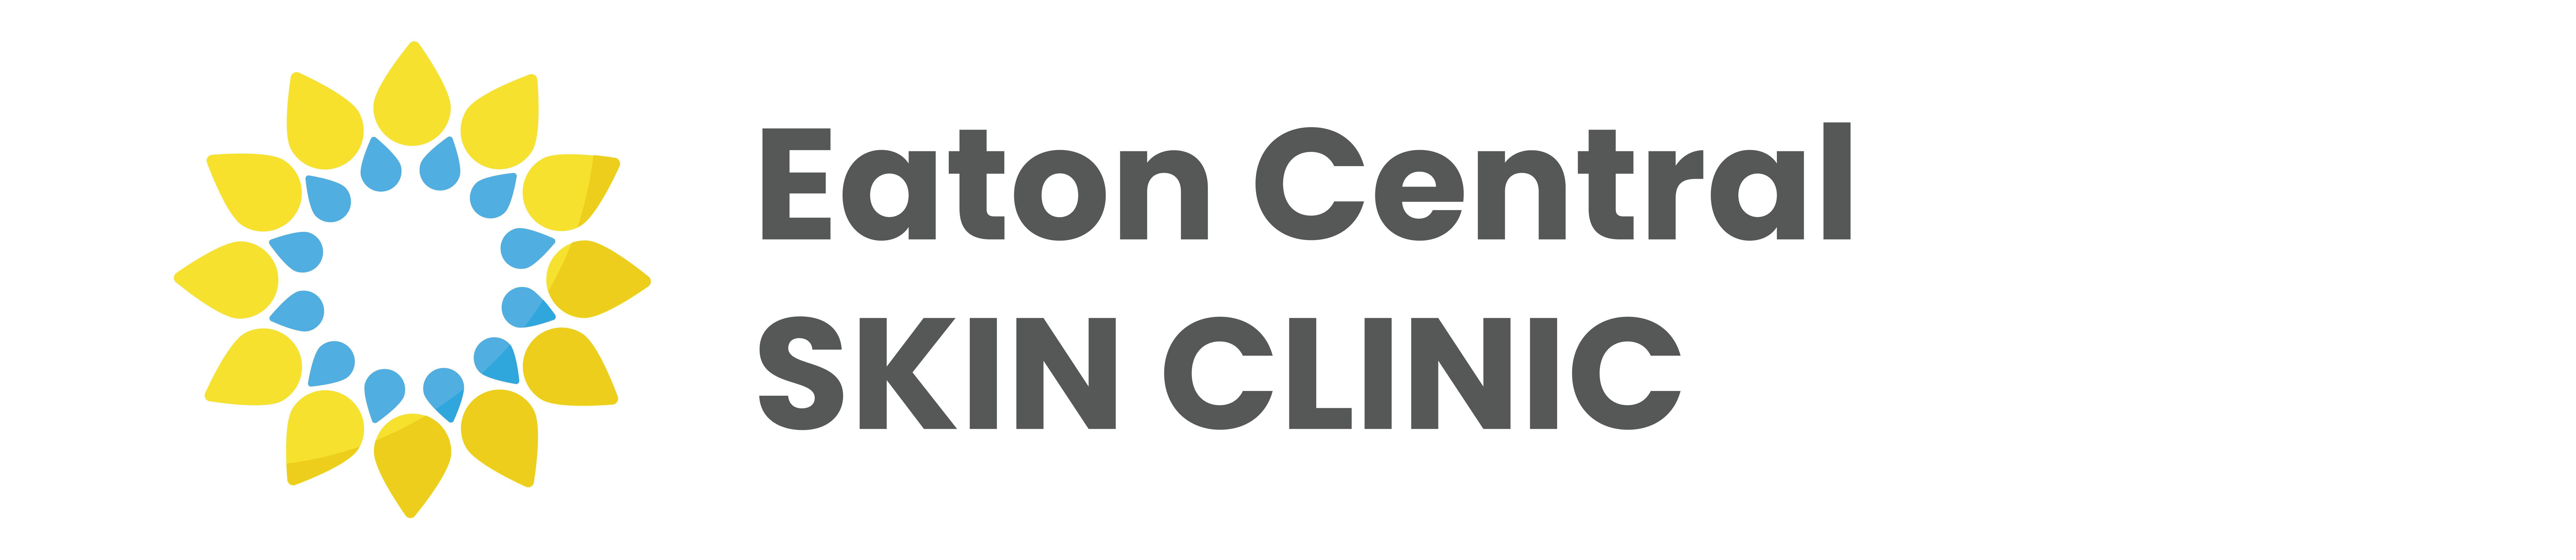 Eaton Central Skin Clinic Logo